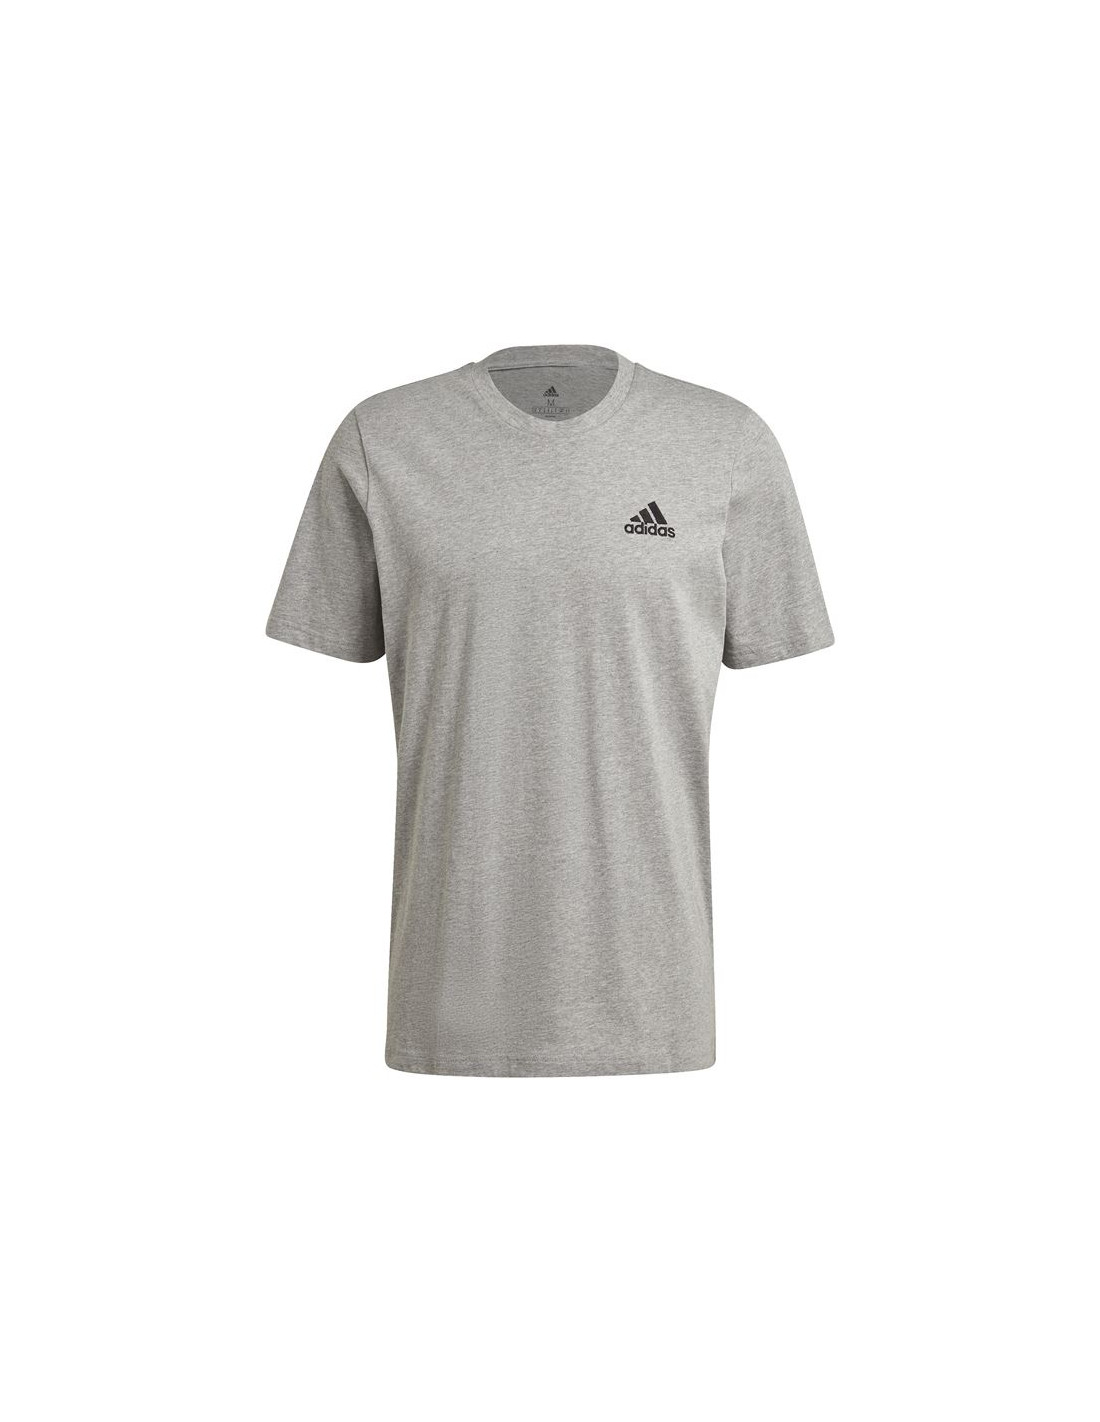 Camiseta adidas essentials embroidered small logo m grey